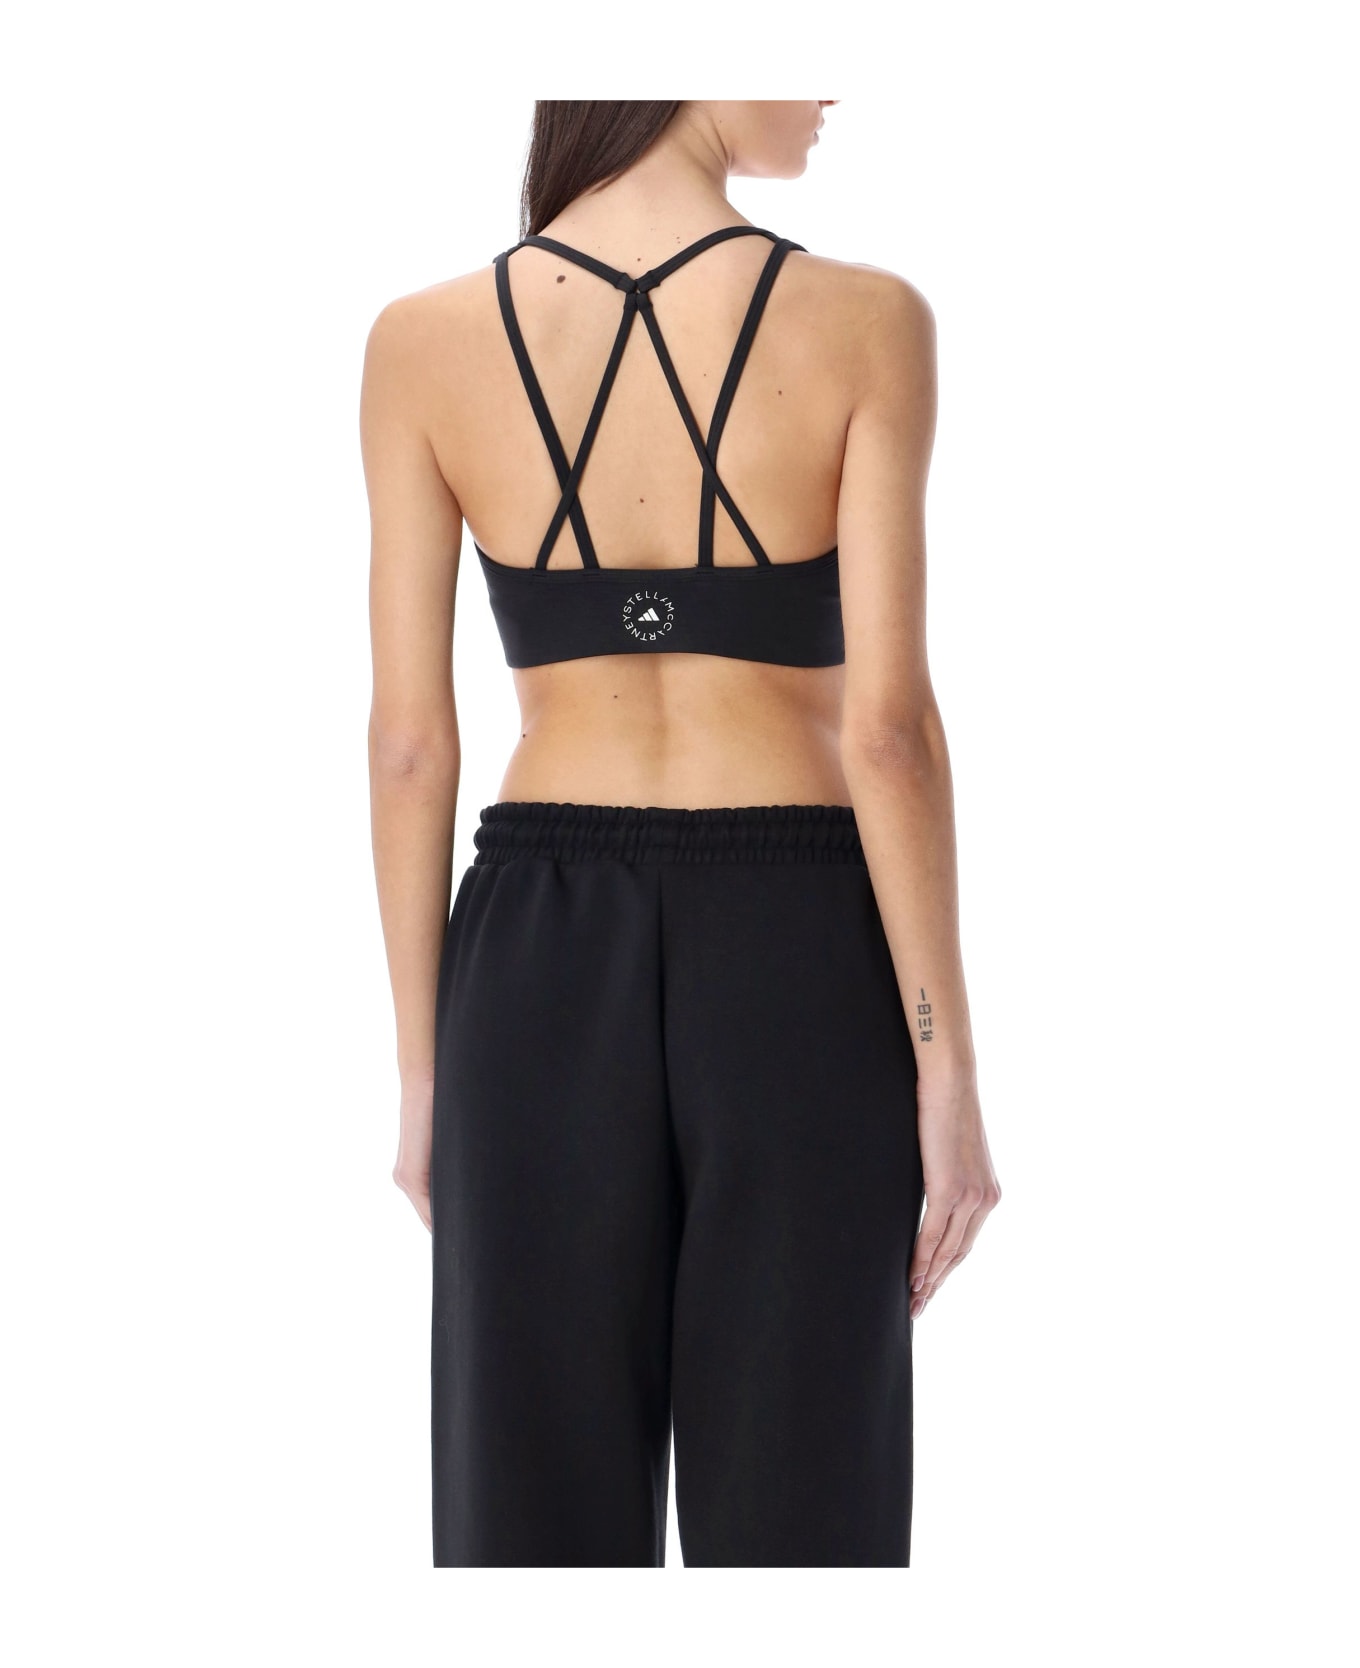 Adidas by Stella McCartney Truestrength Yoga Medium Support Sports Bra - Black/white